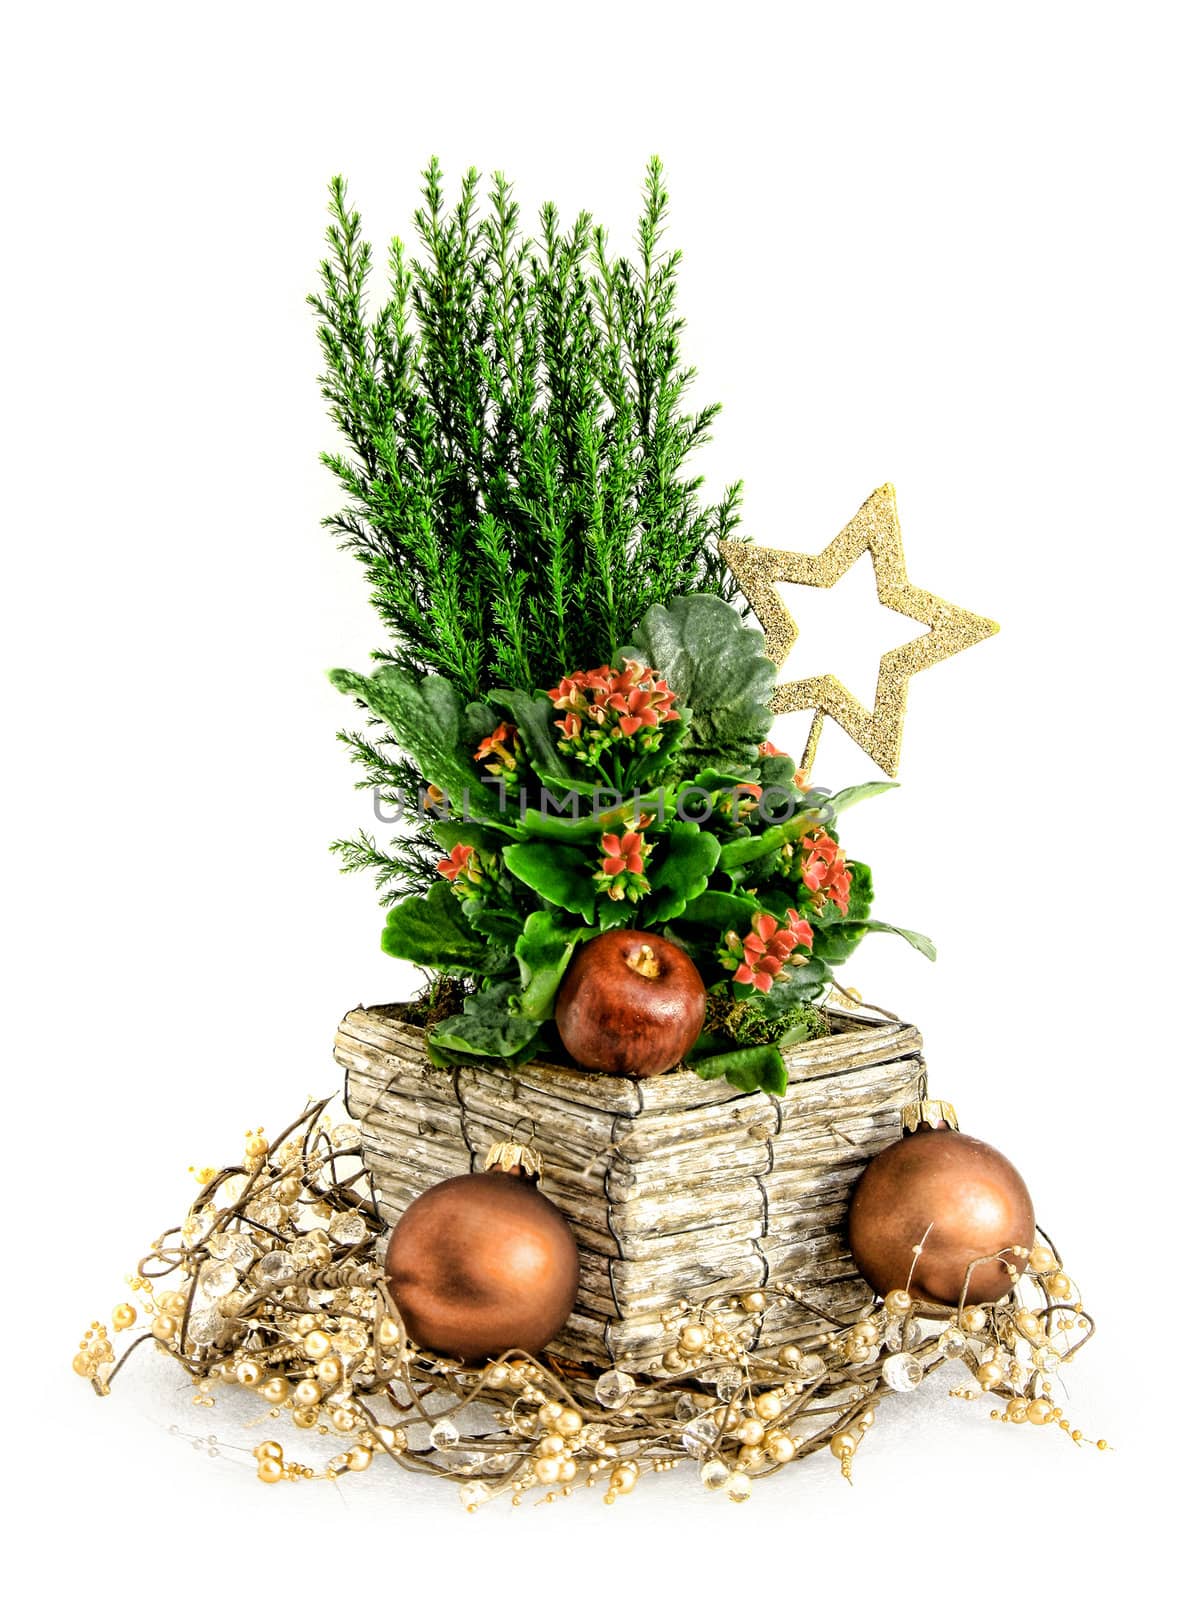 Christmas arrangement by anterovium